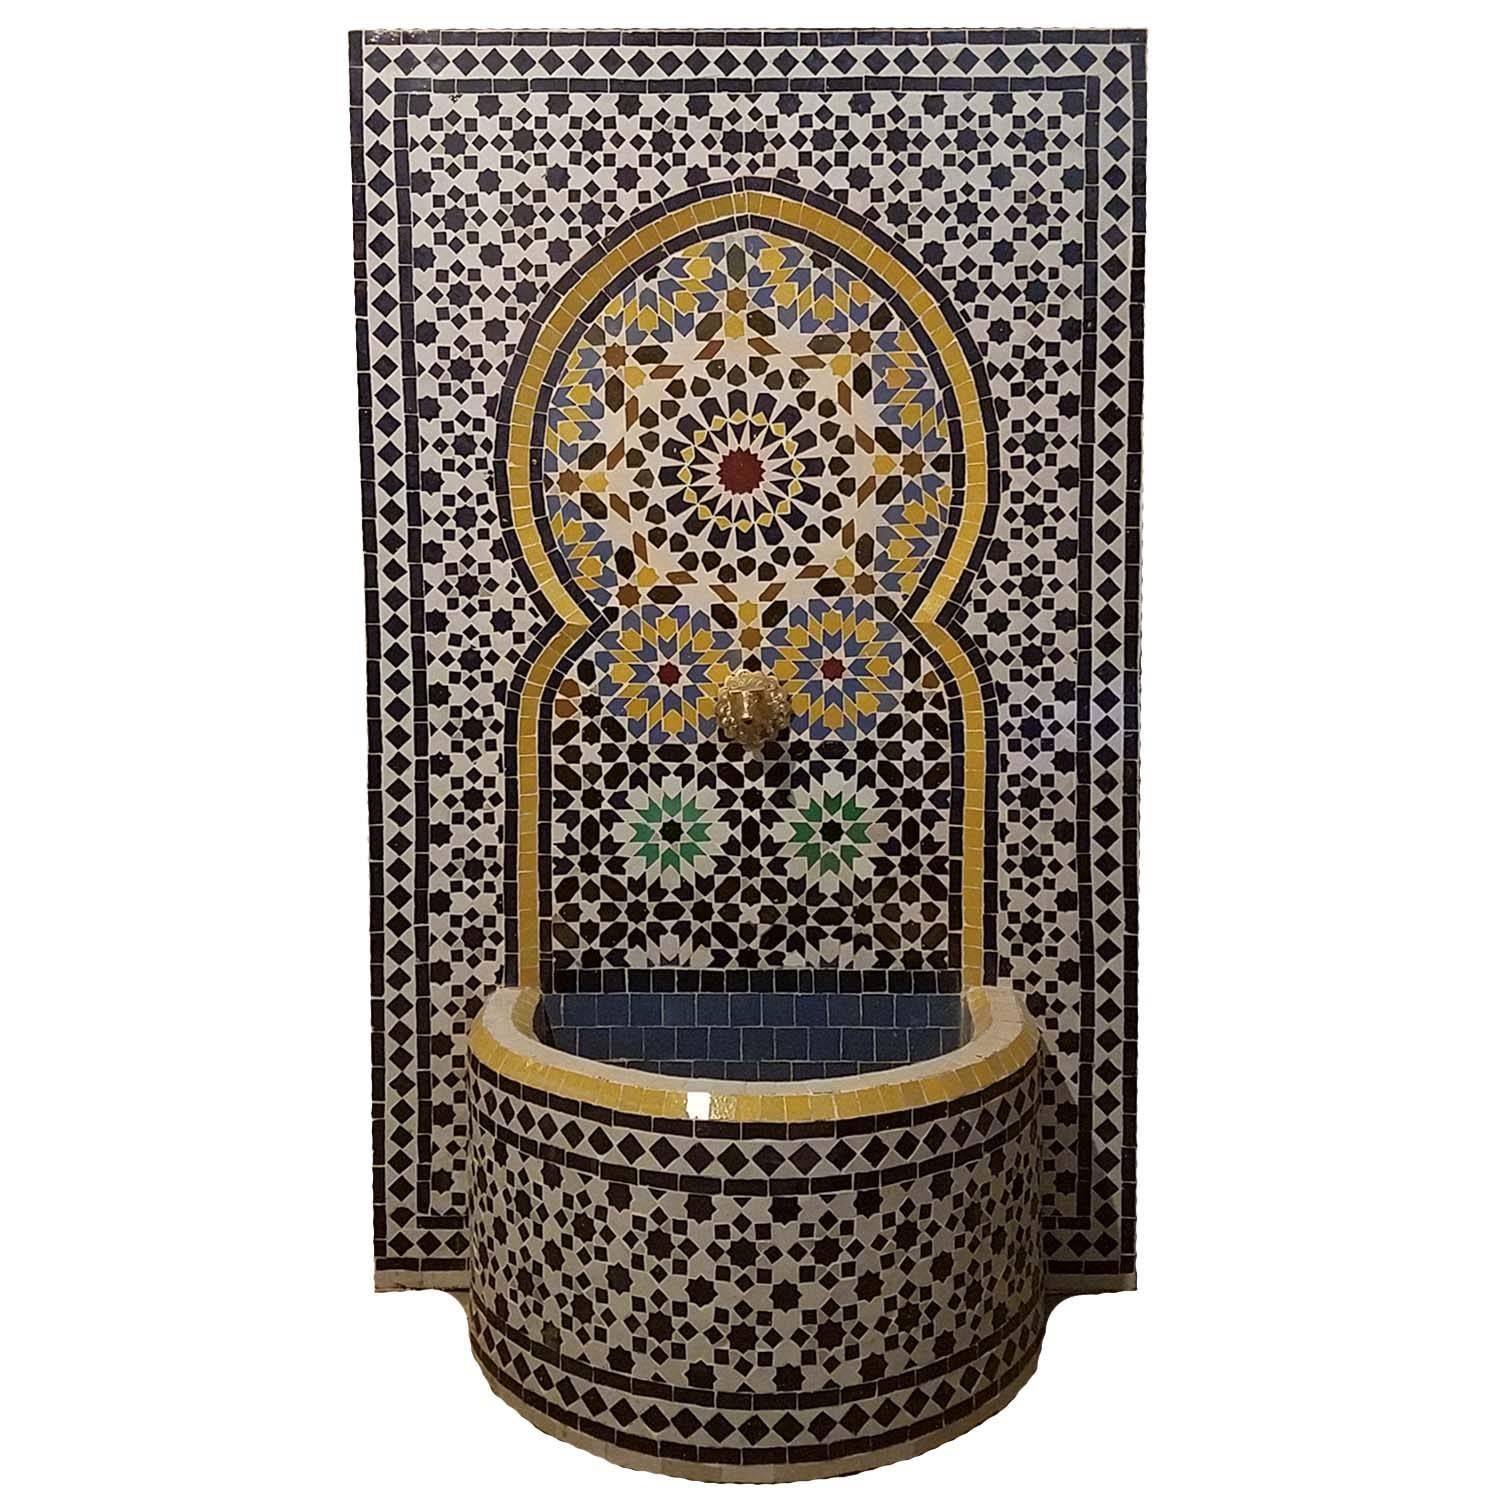 Meknes Moroccan Mosaic Fountain, All Mosaics 2